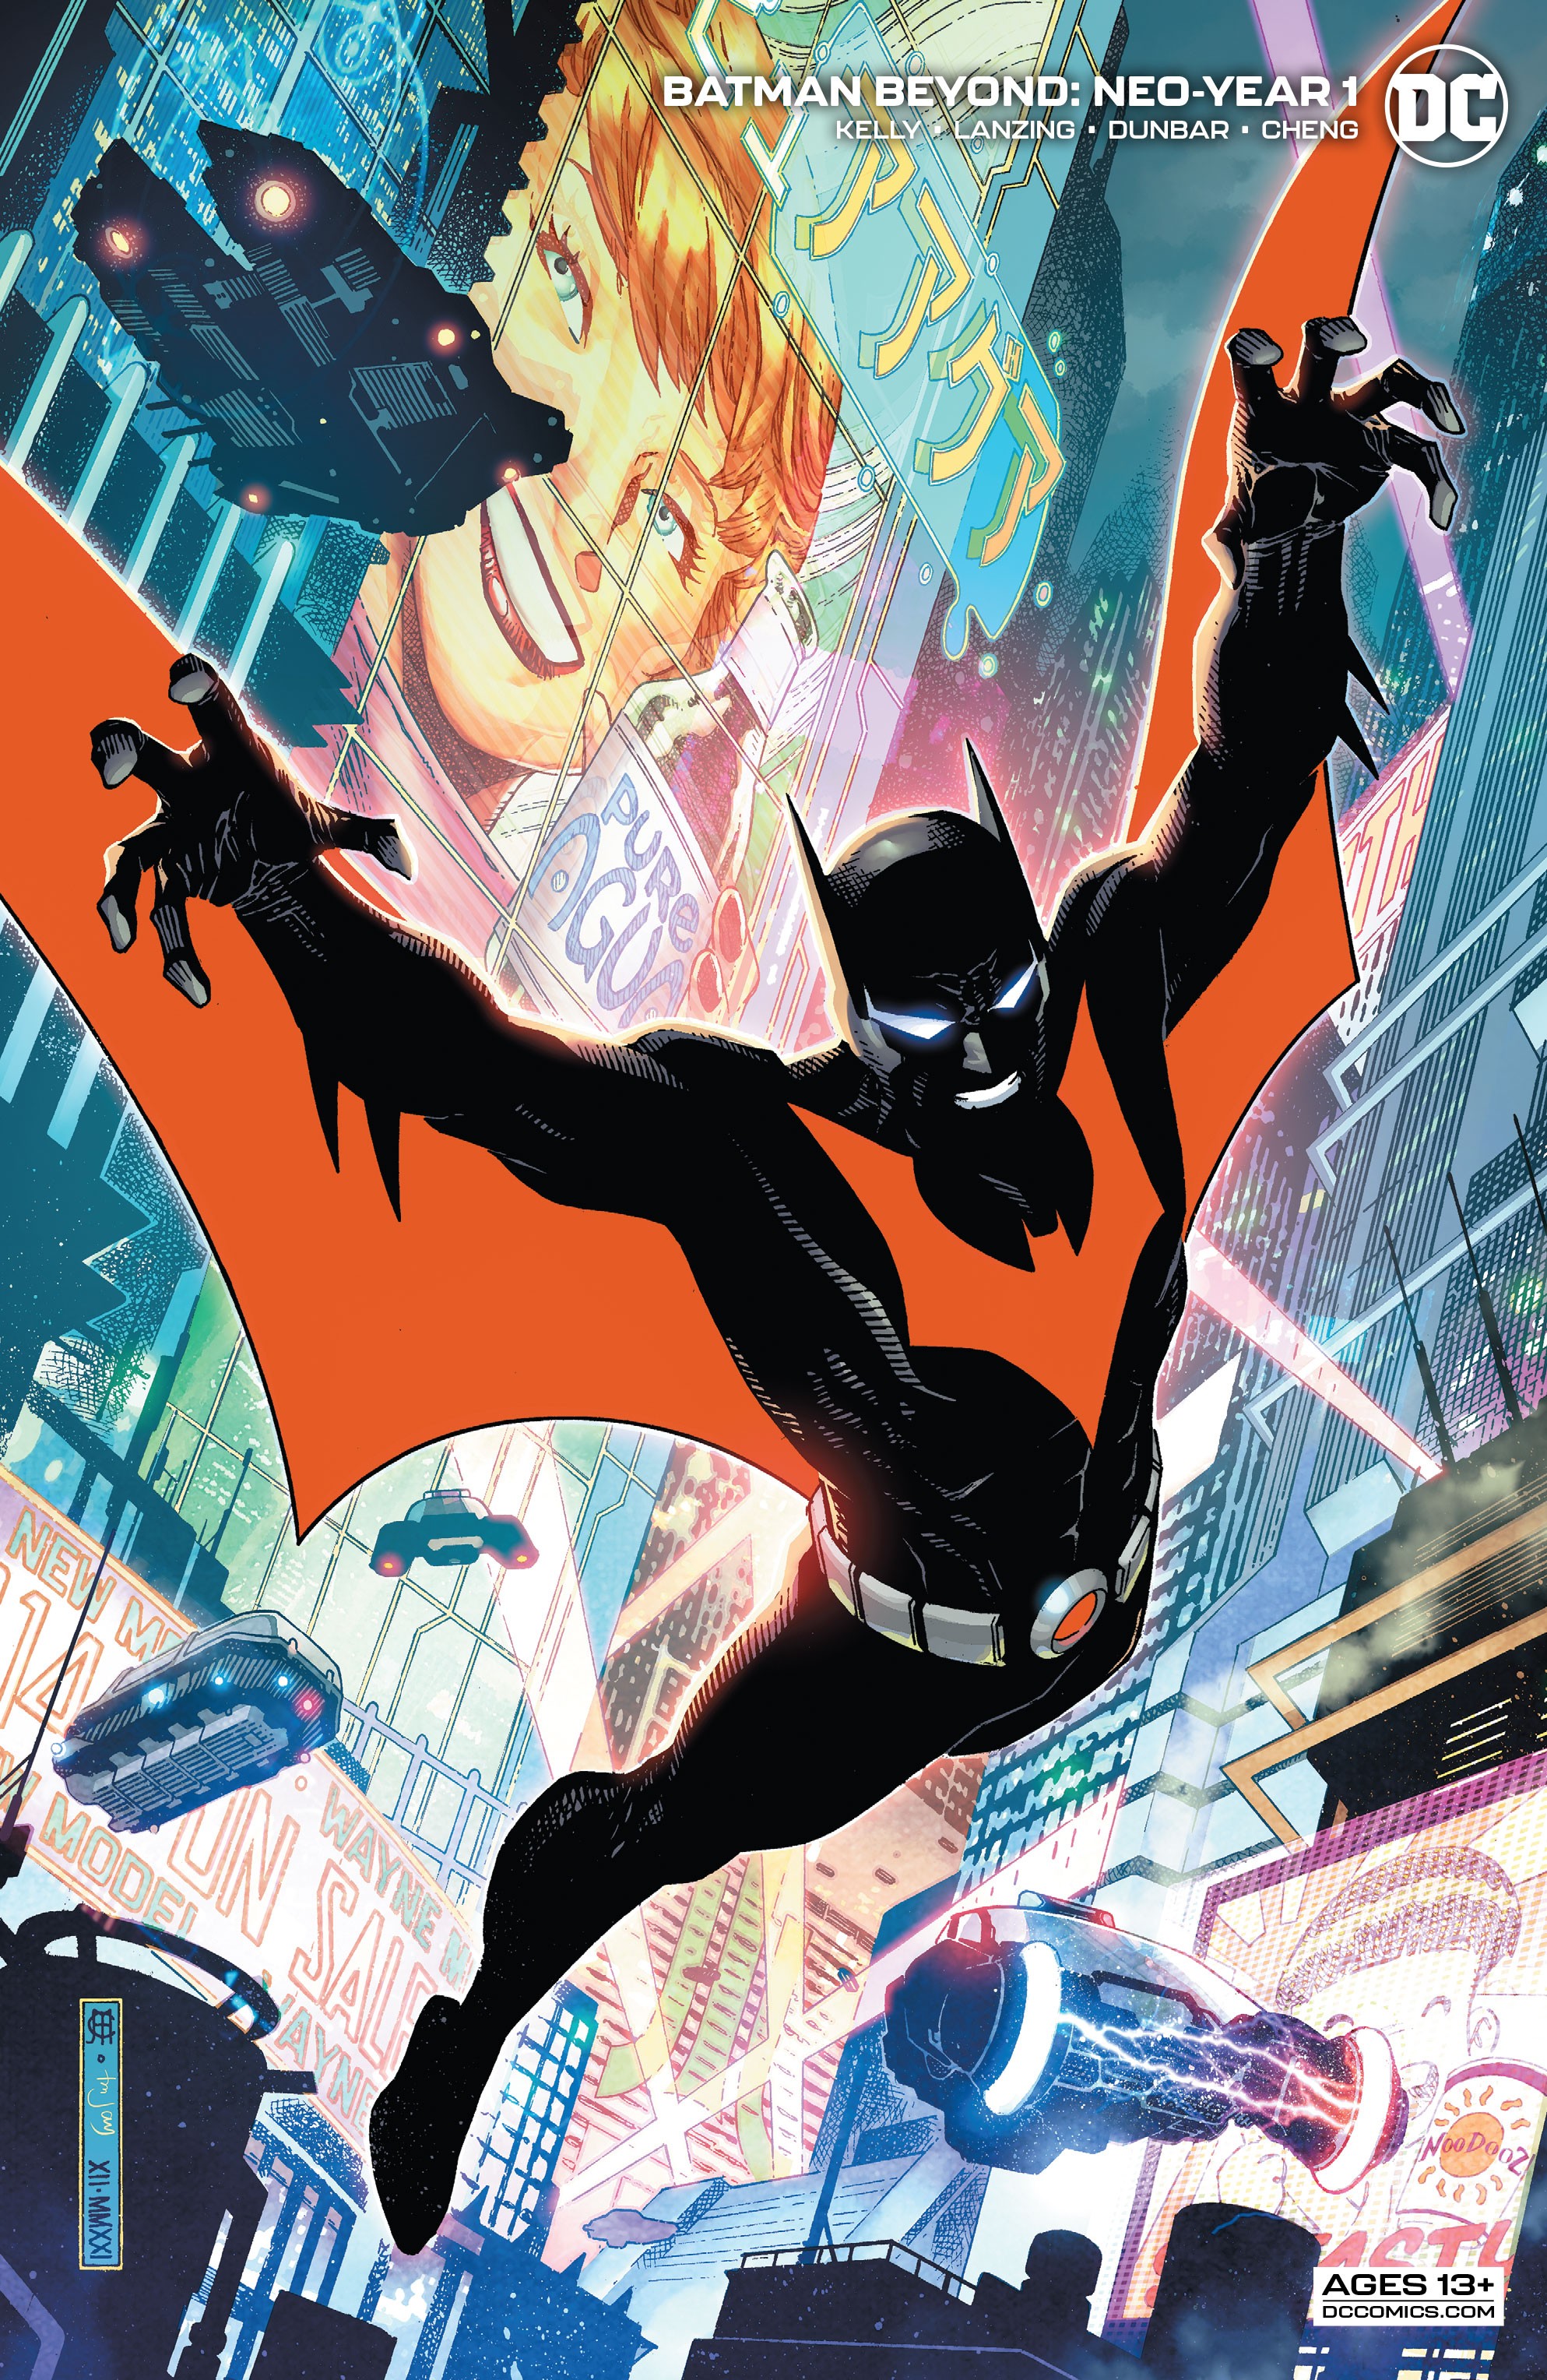 Batman Beyond: Neo-Year Vol 1 1 | DC Database | Fandom